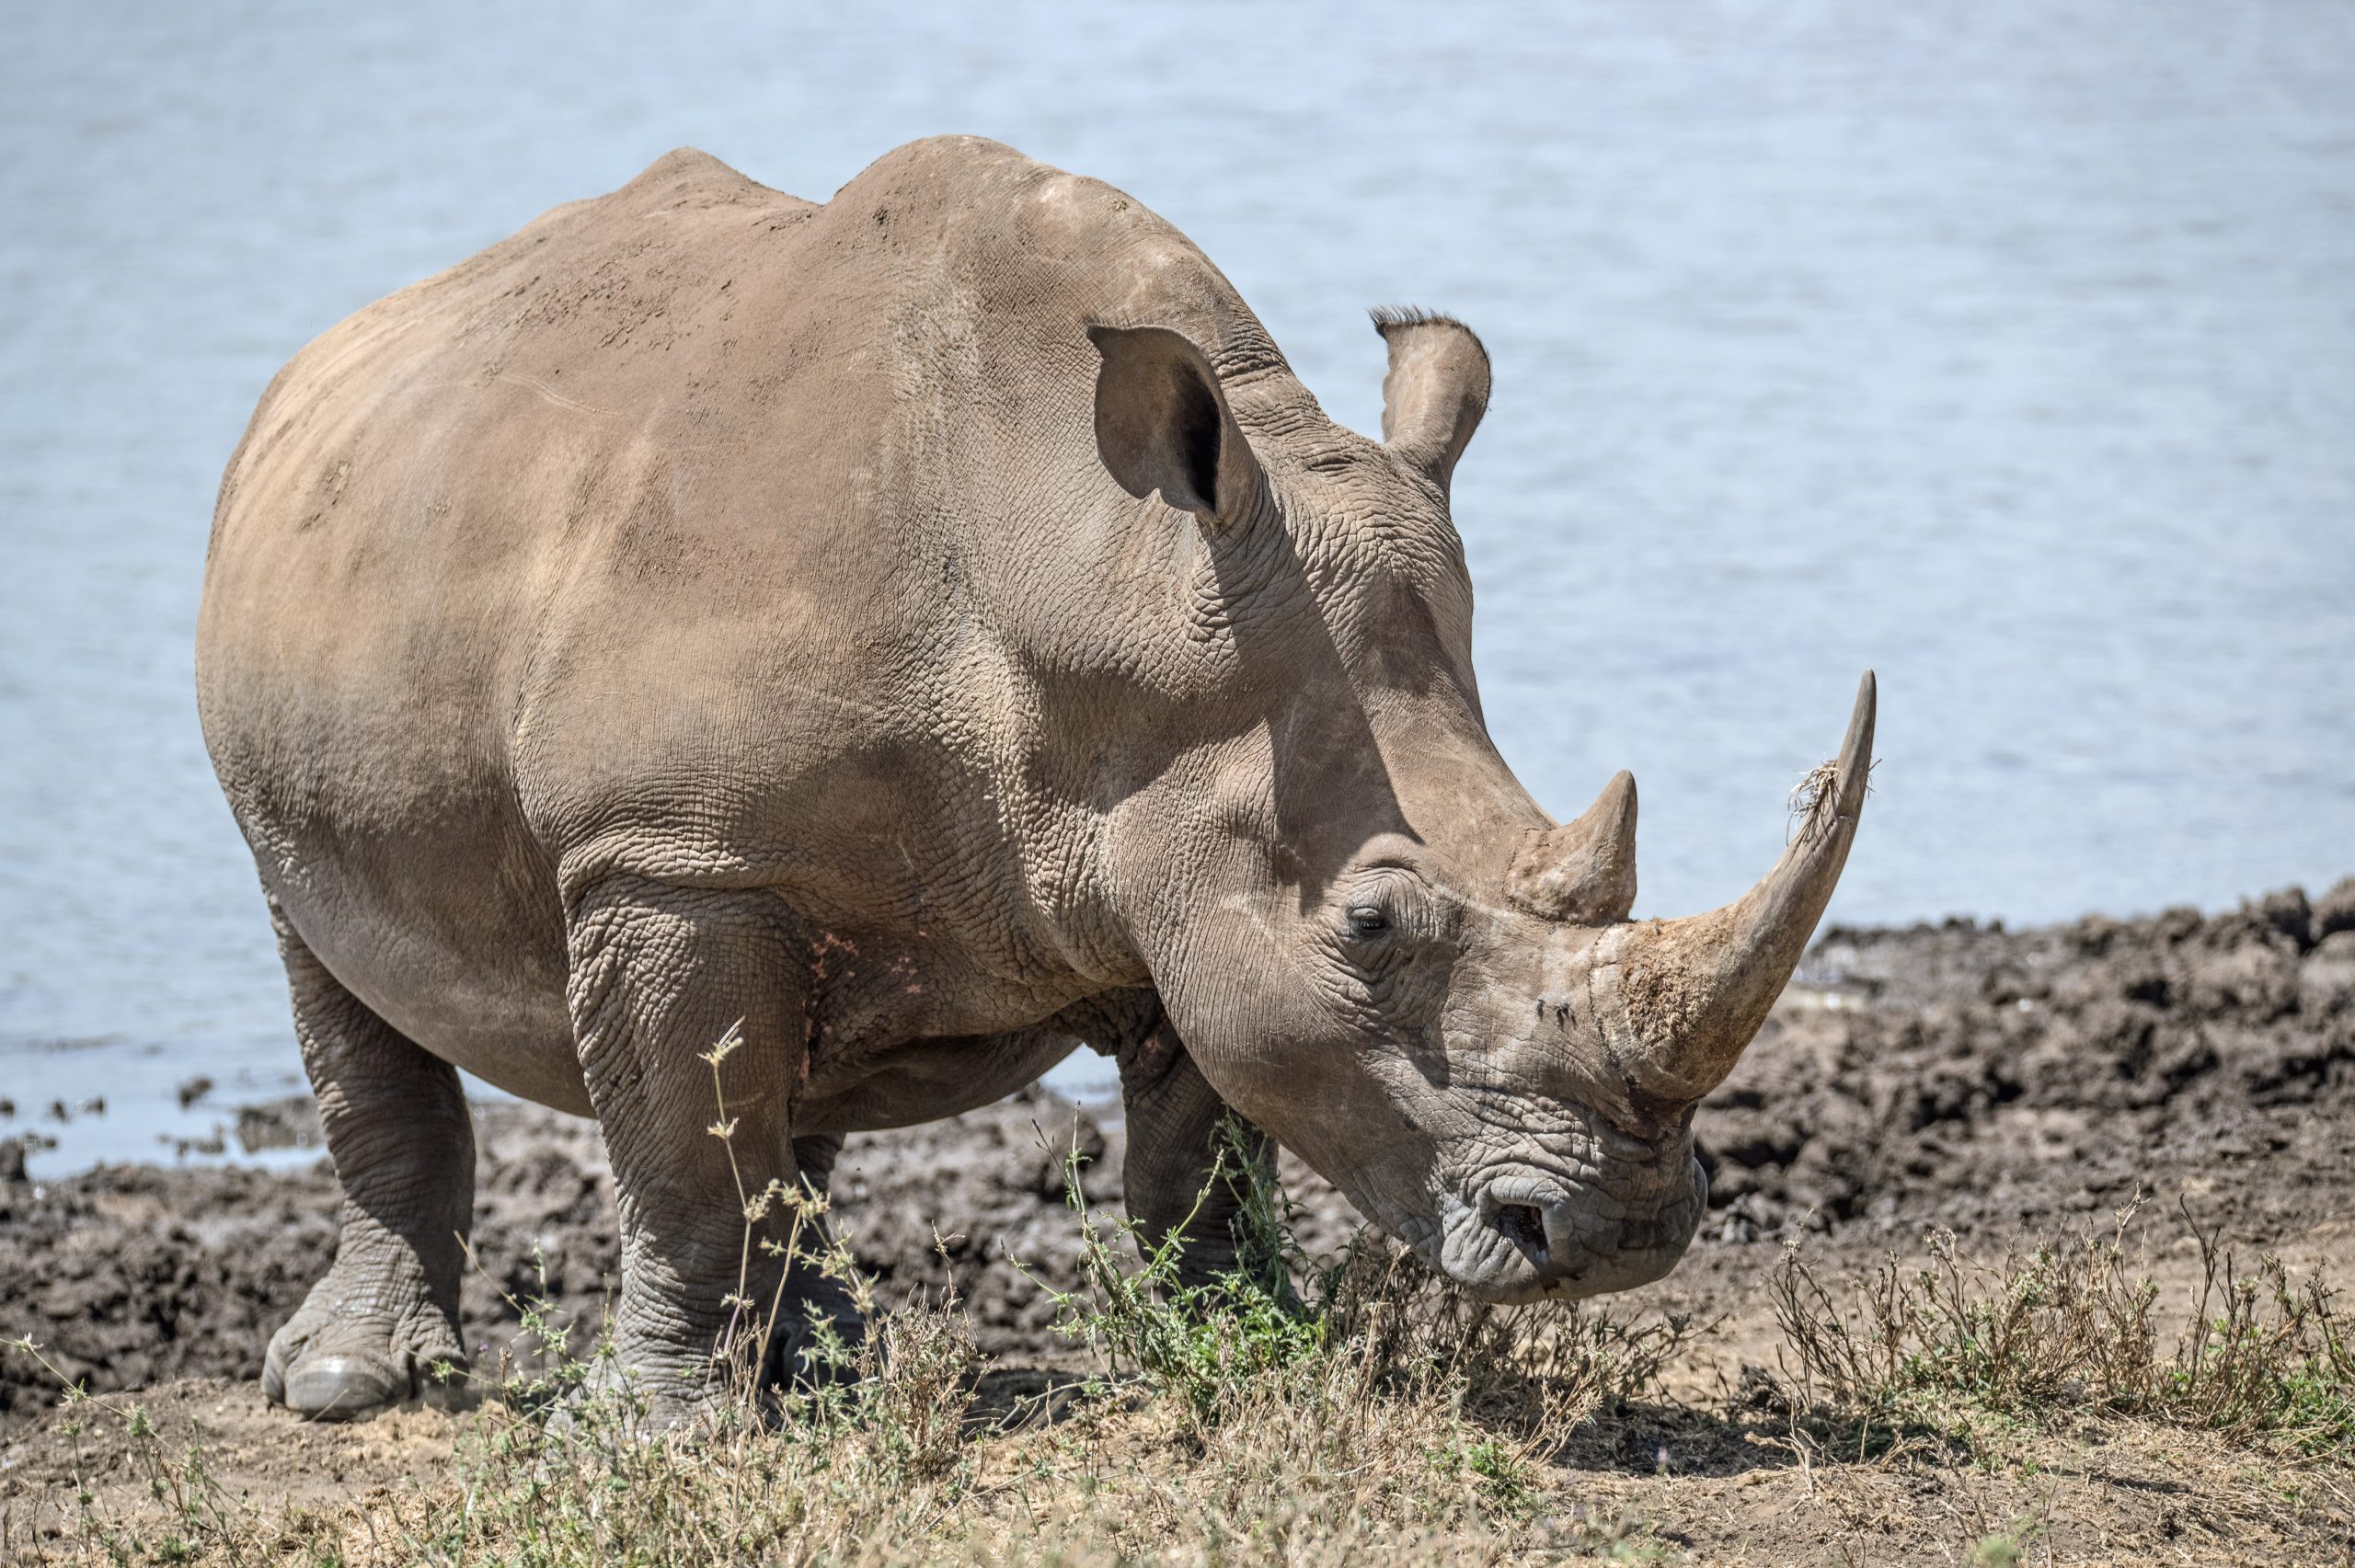 Rhino grazes next to a body of water at Lewa conservancy in kenya